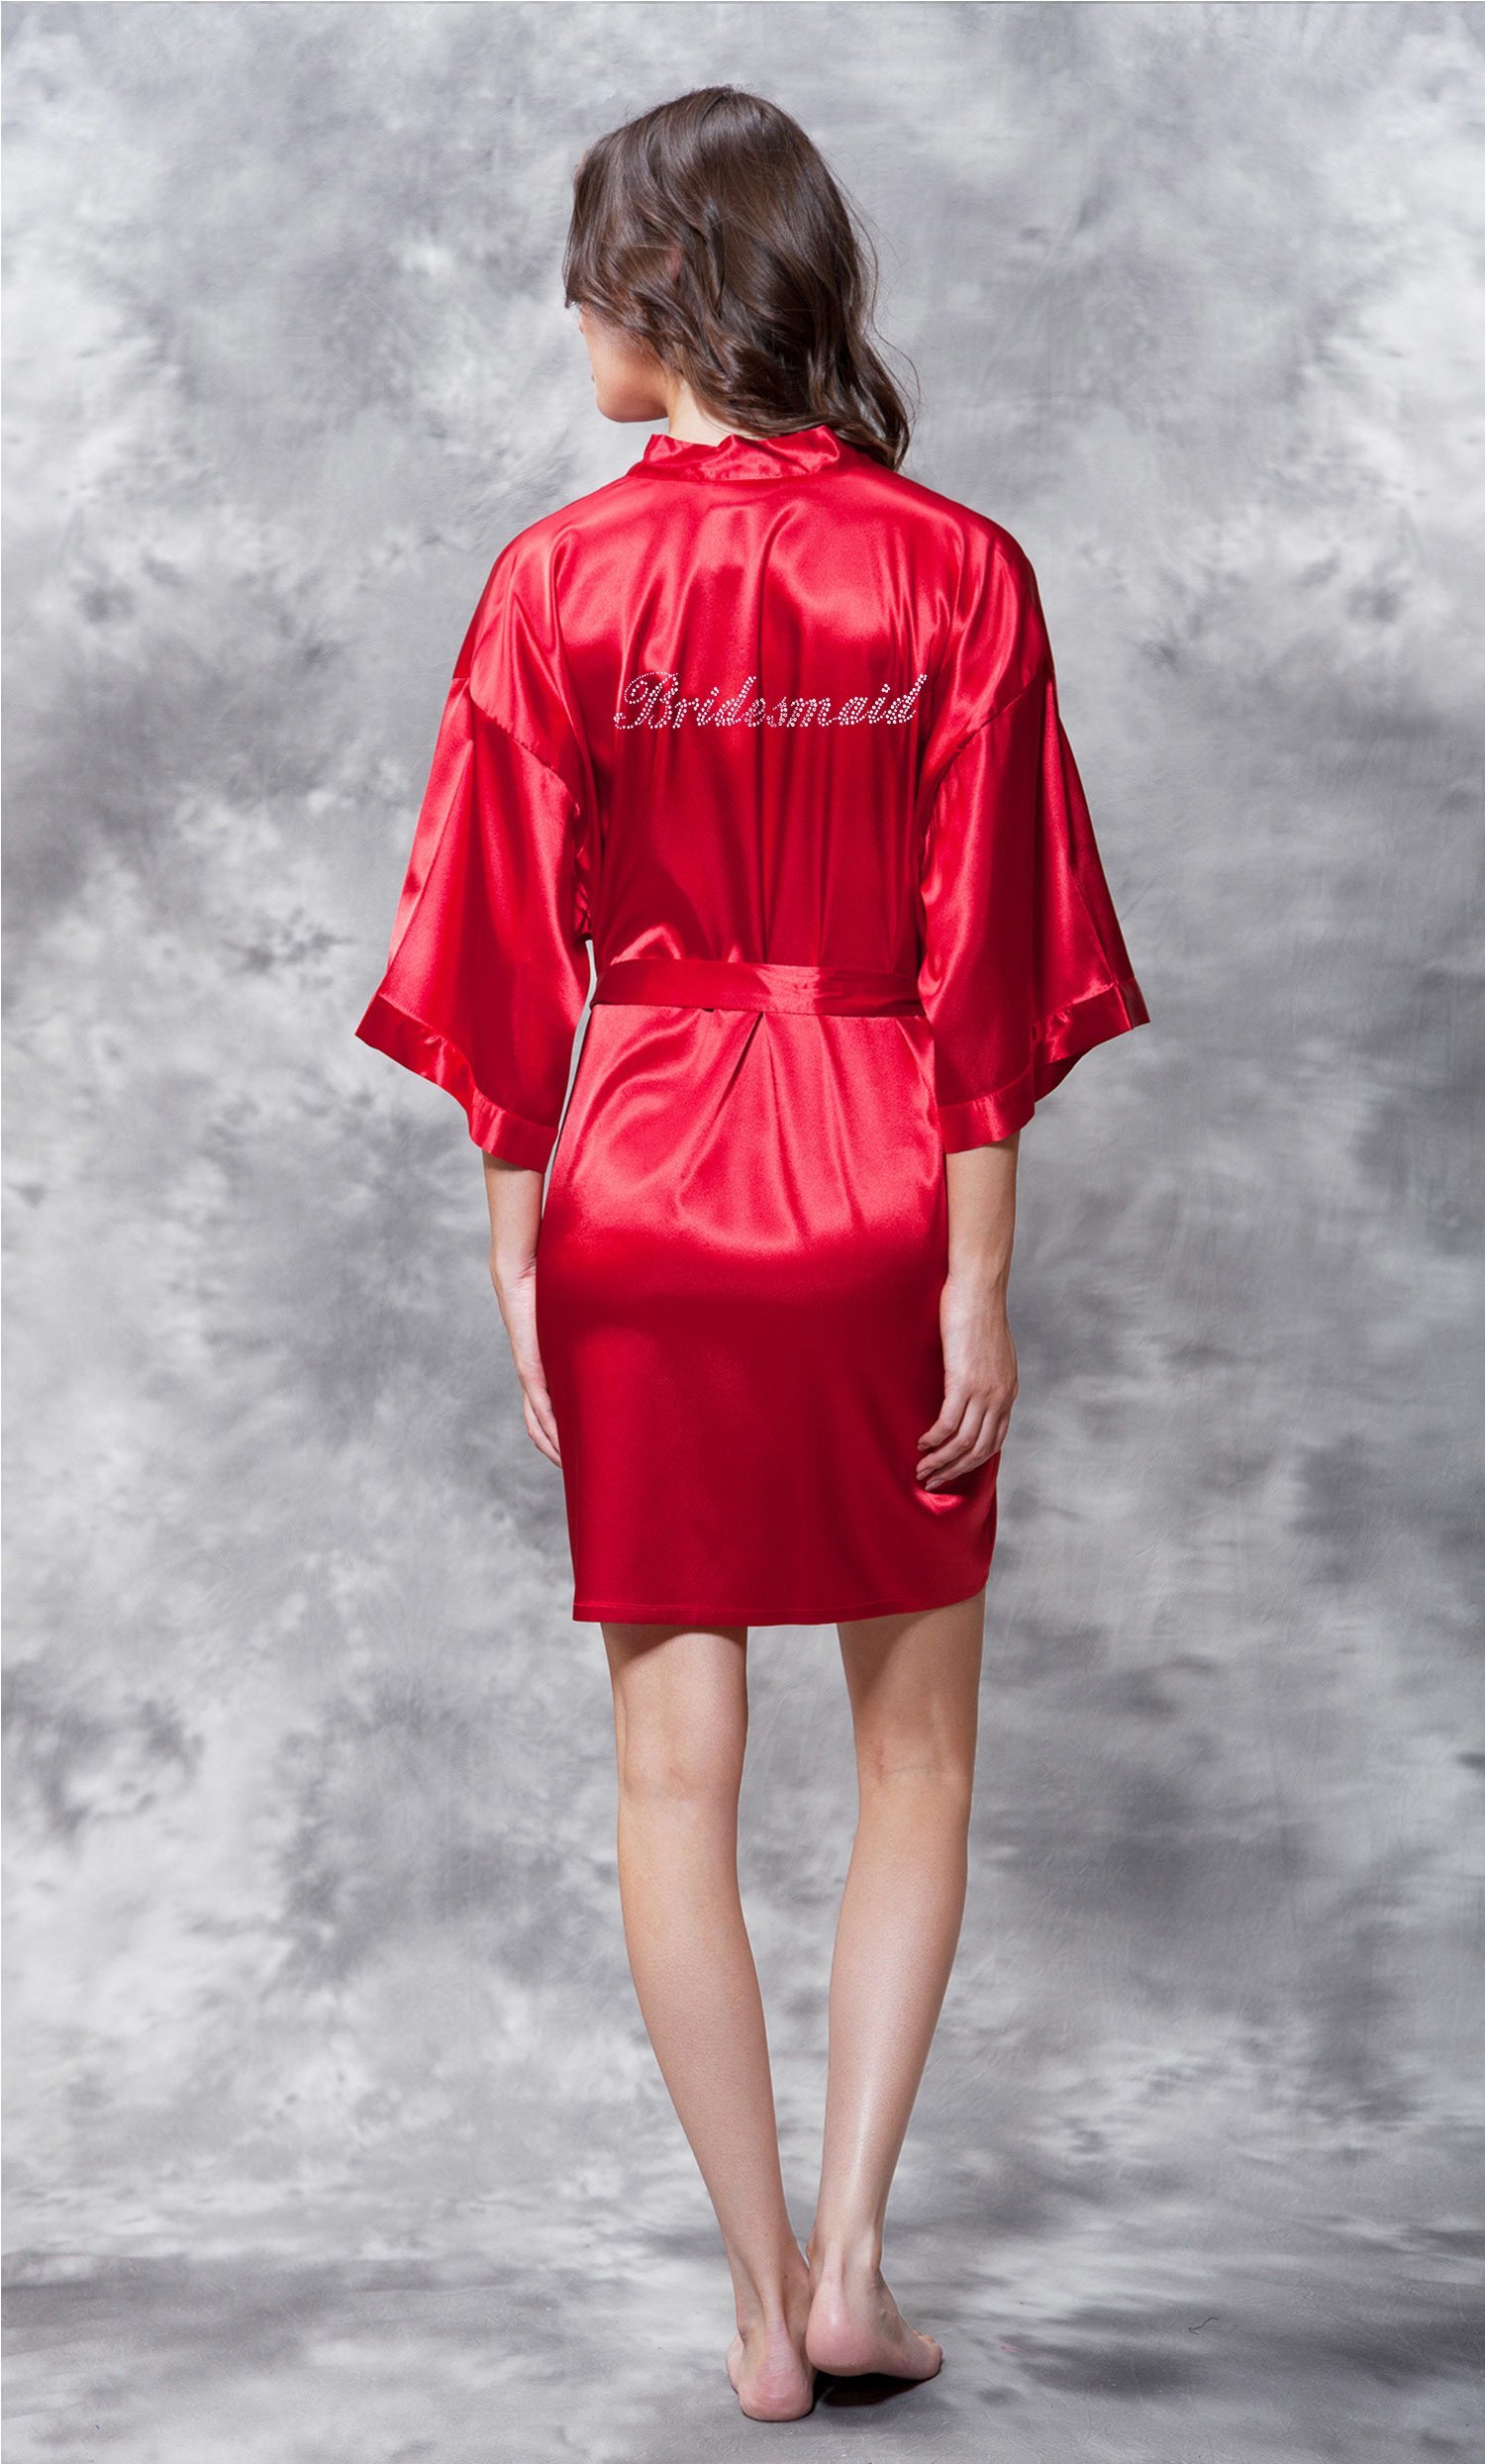 CLEARANCE  Bridesmaid Clear Rhinestone Satin Kimono  Short Robe - Final Sale-Robemart.com